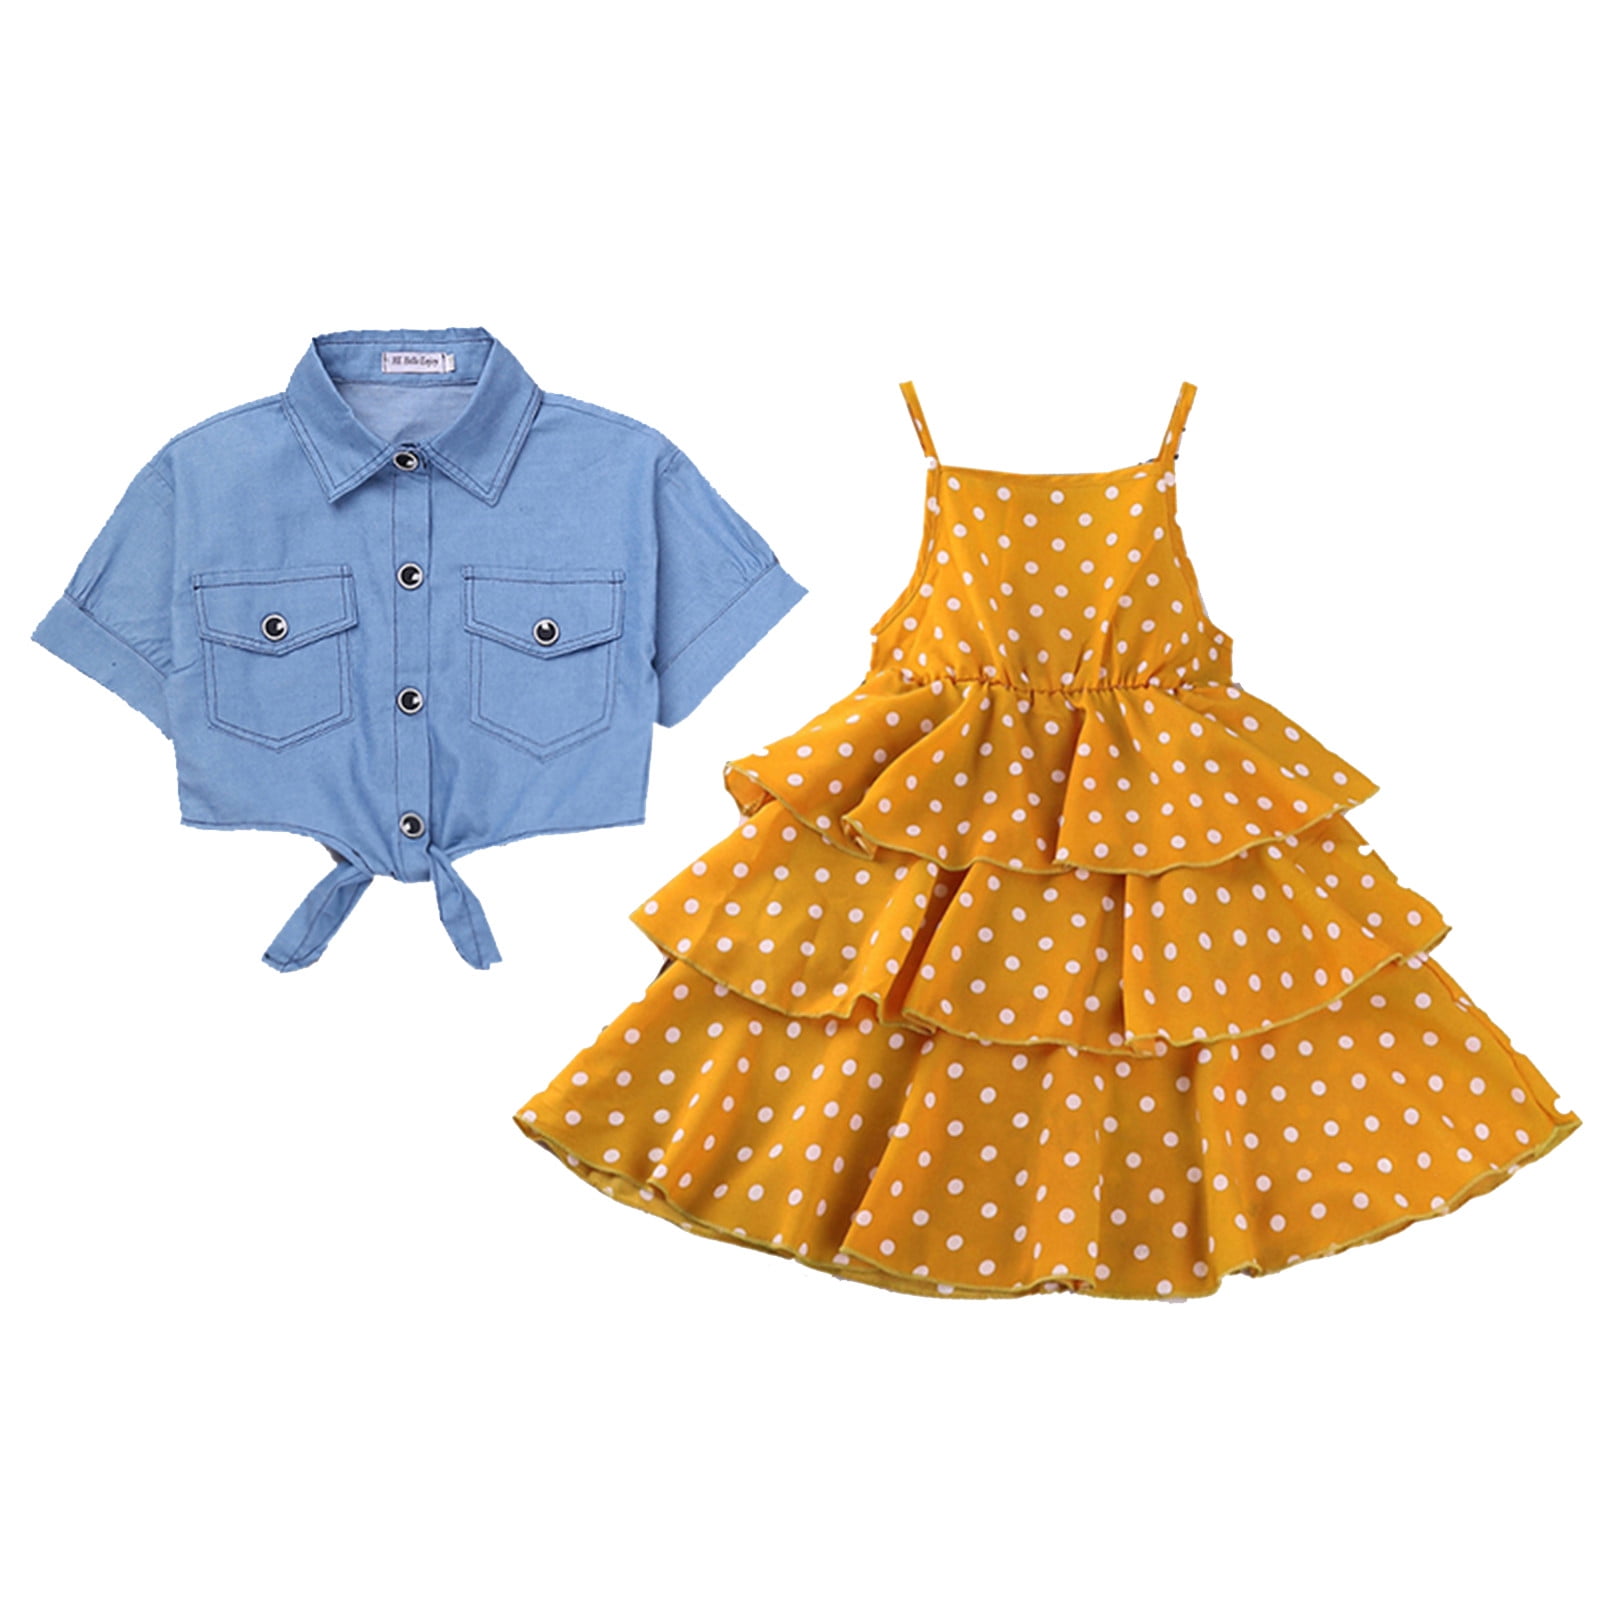 Summer Work Outfit Idea: A Flowy Polka-Dot Dress, Denim Jacket